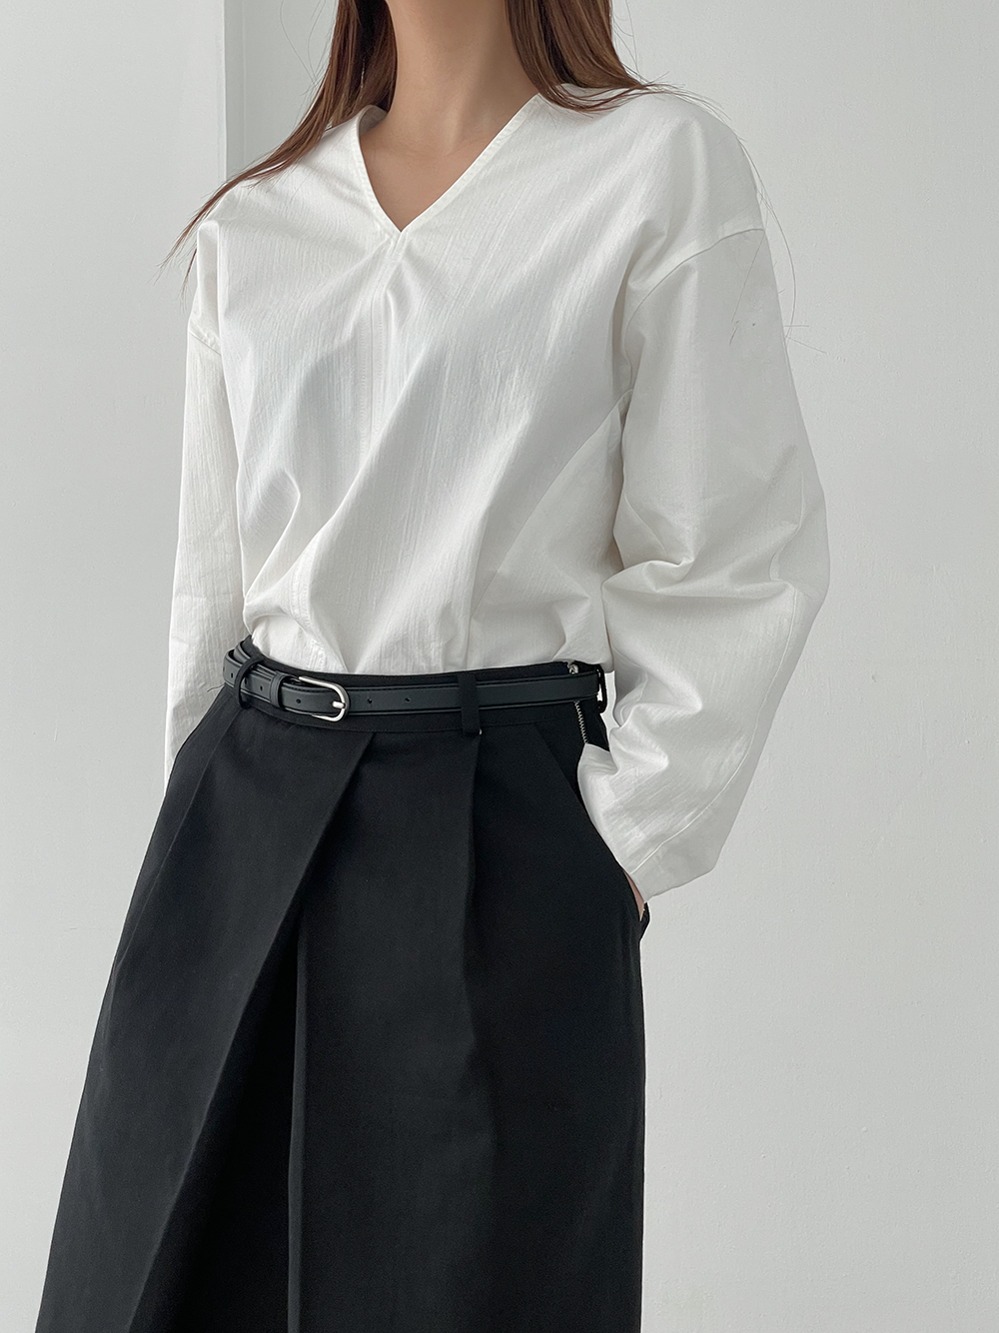 coated cotton blouse (2color)